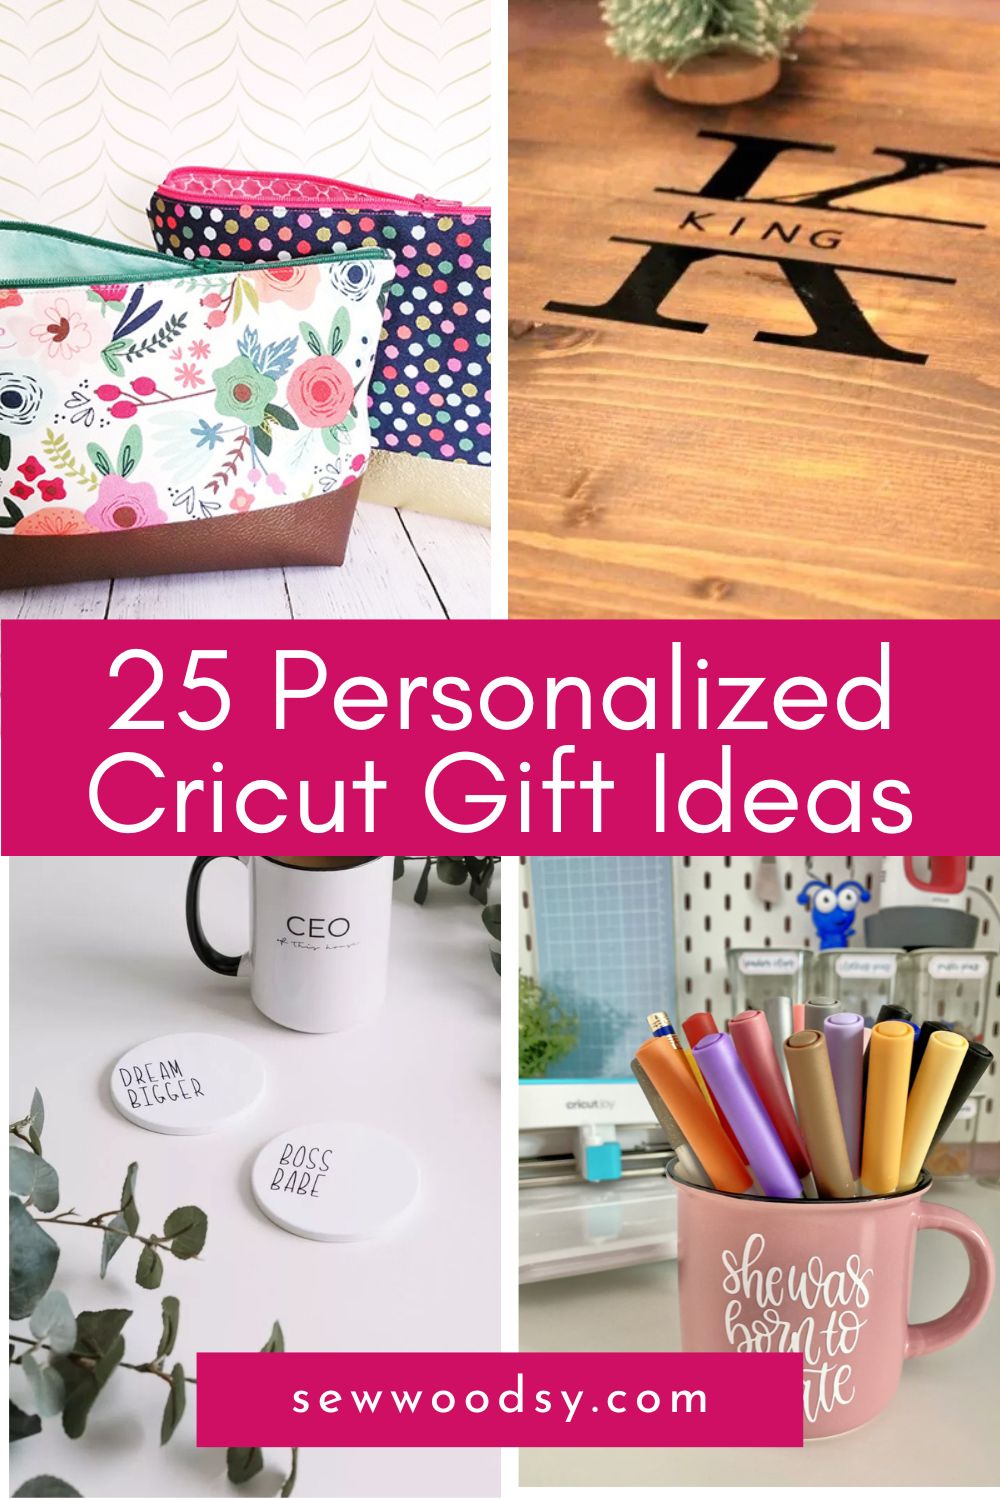 https://sewwoodsy.com/wp-content/uploads/2023/02/25-Personalized-Cricut-Gift-Ideas.jpg